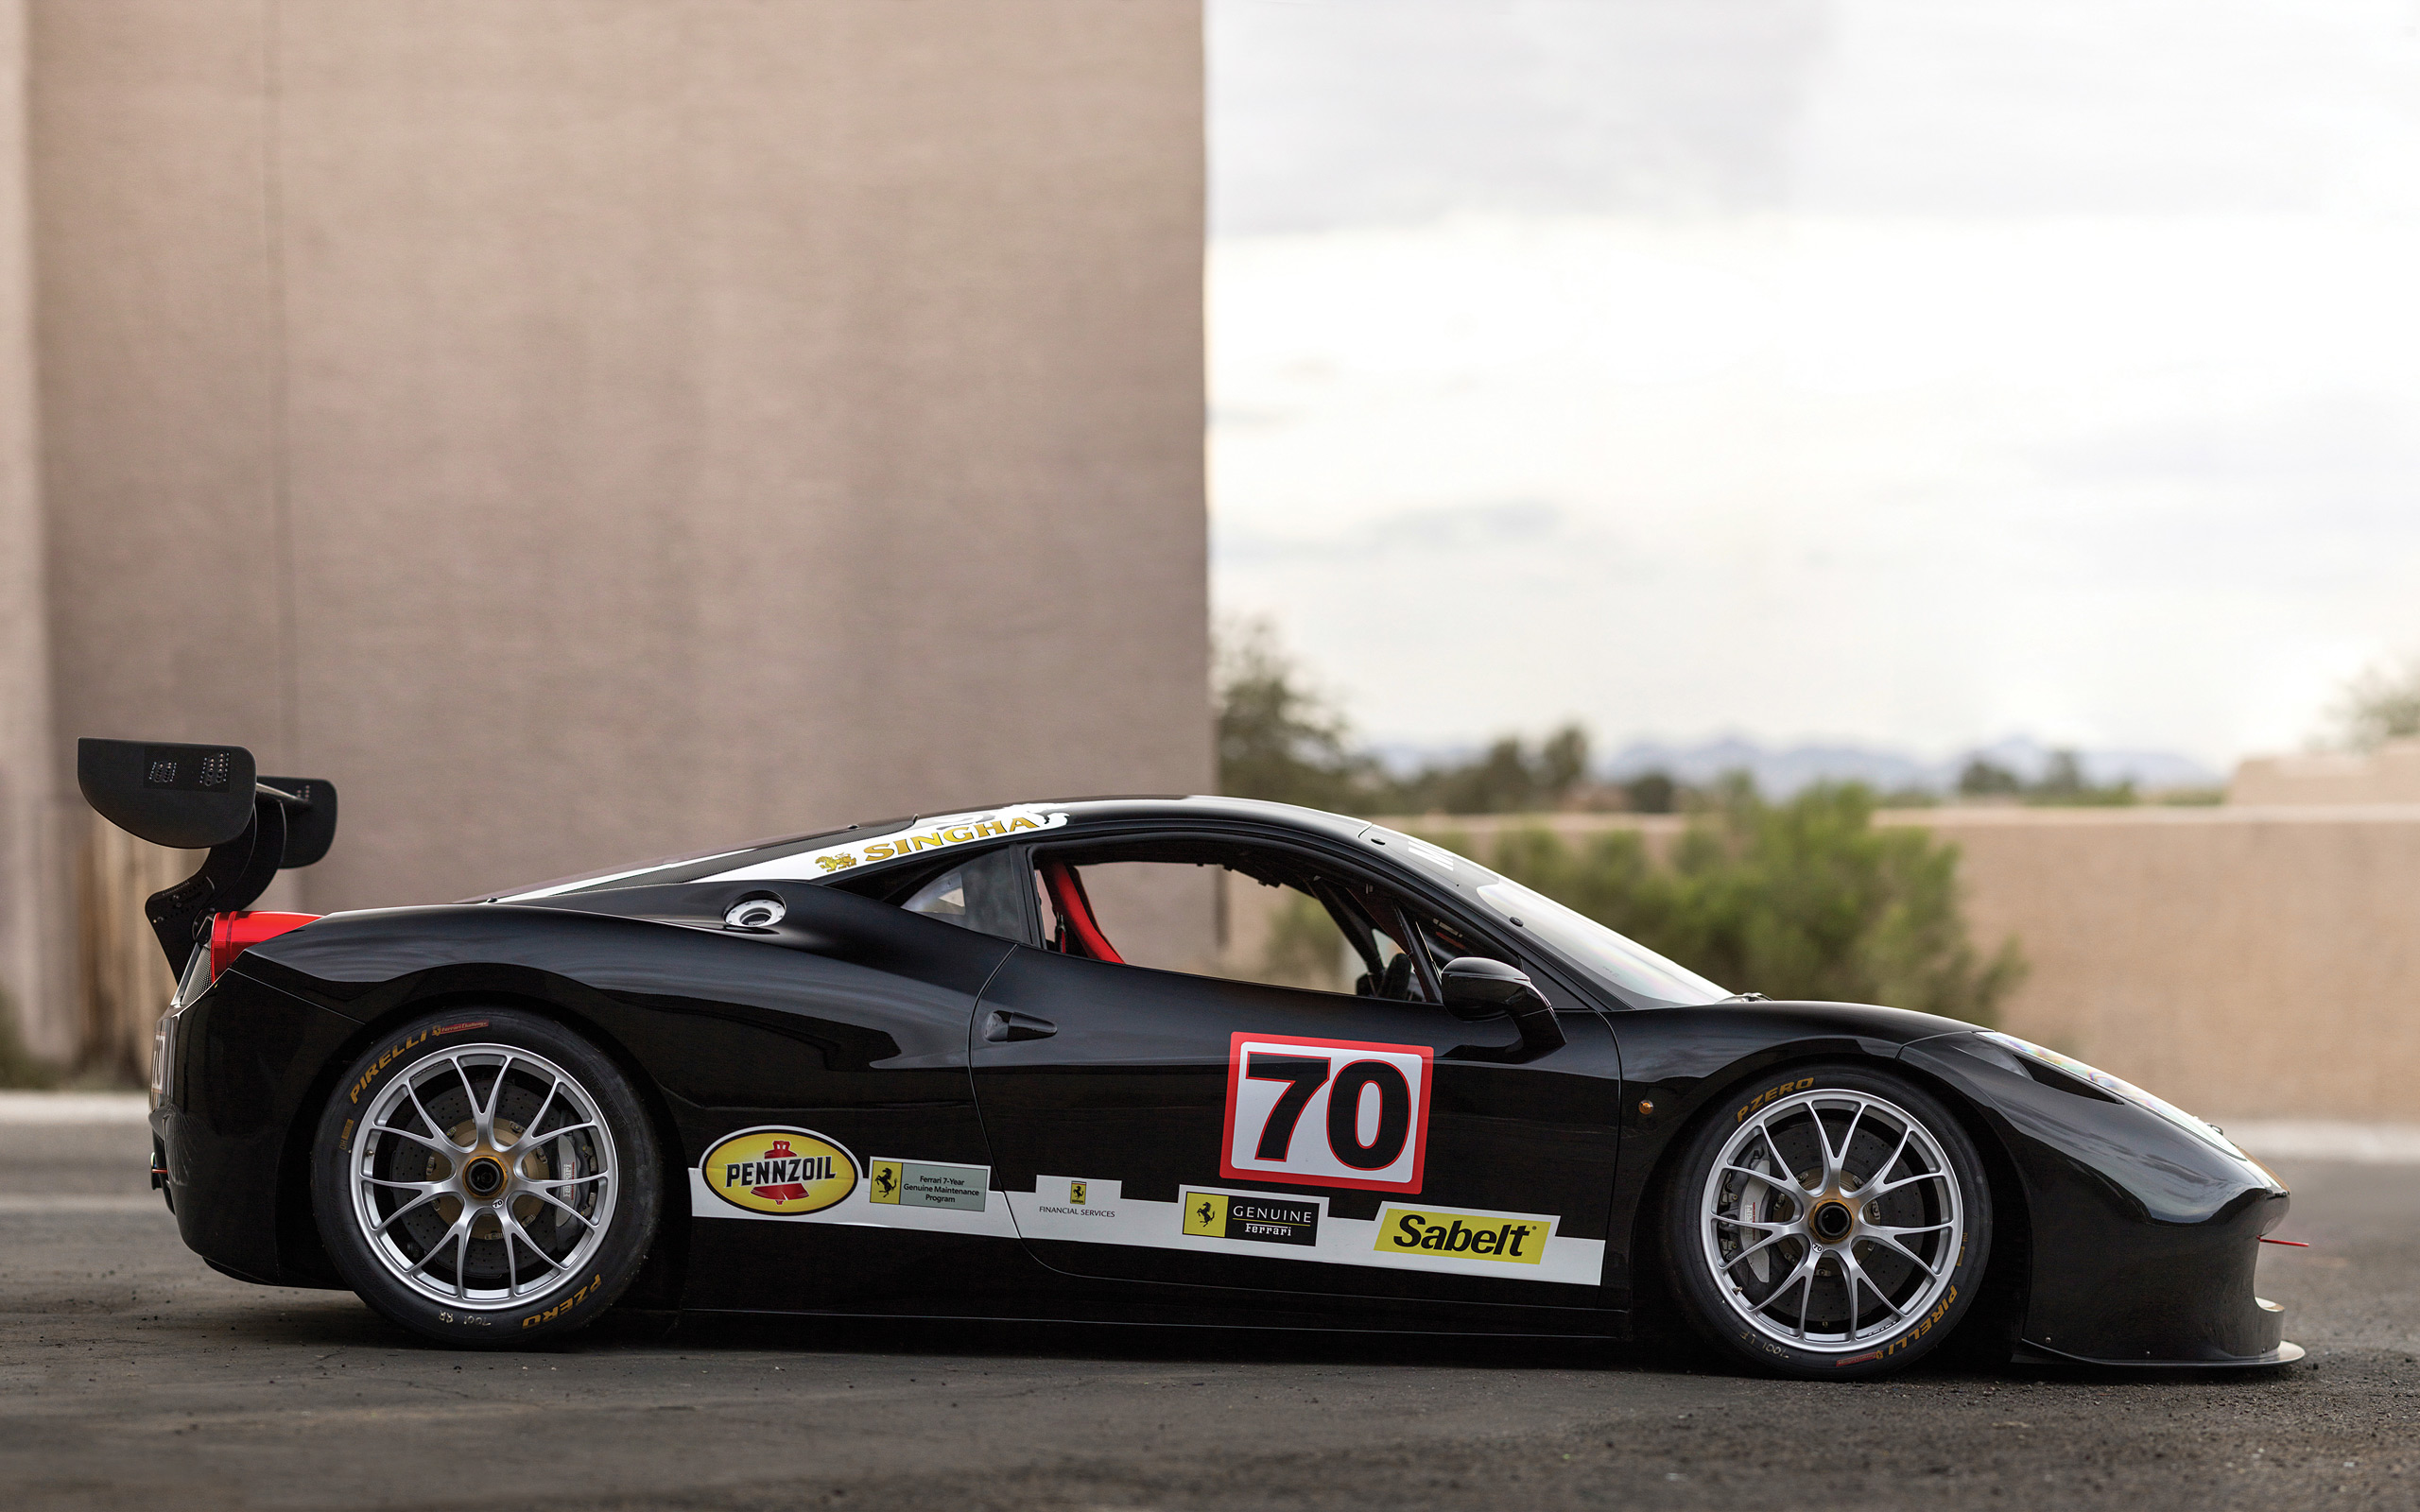  2014 Ferrari 458 Challenge Evoluzione Wallpaper.